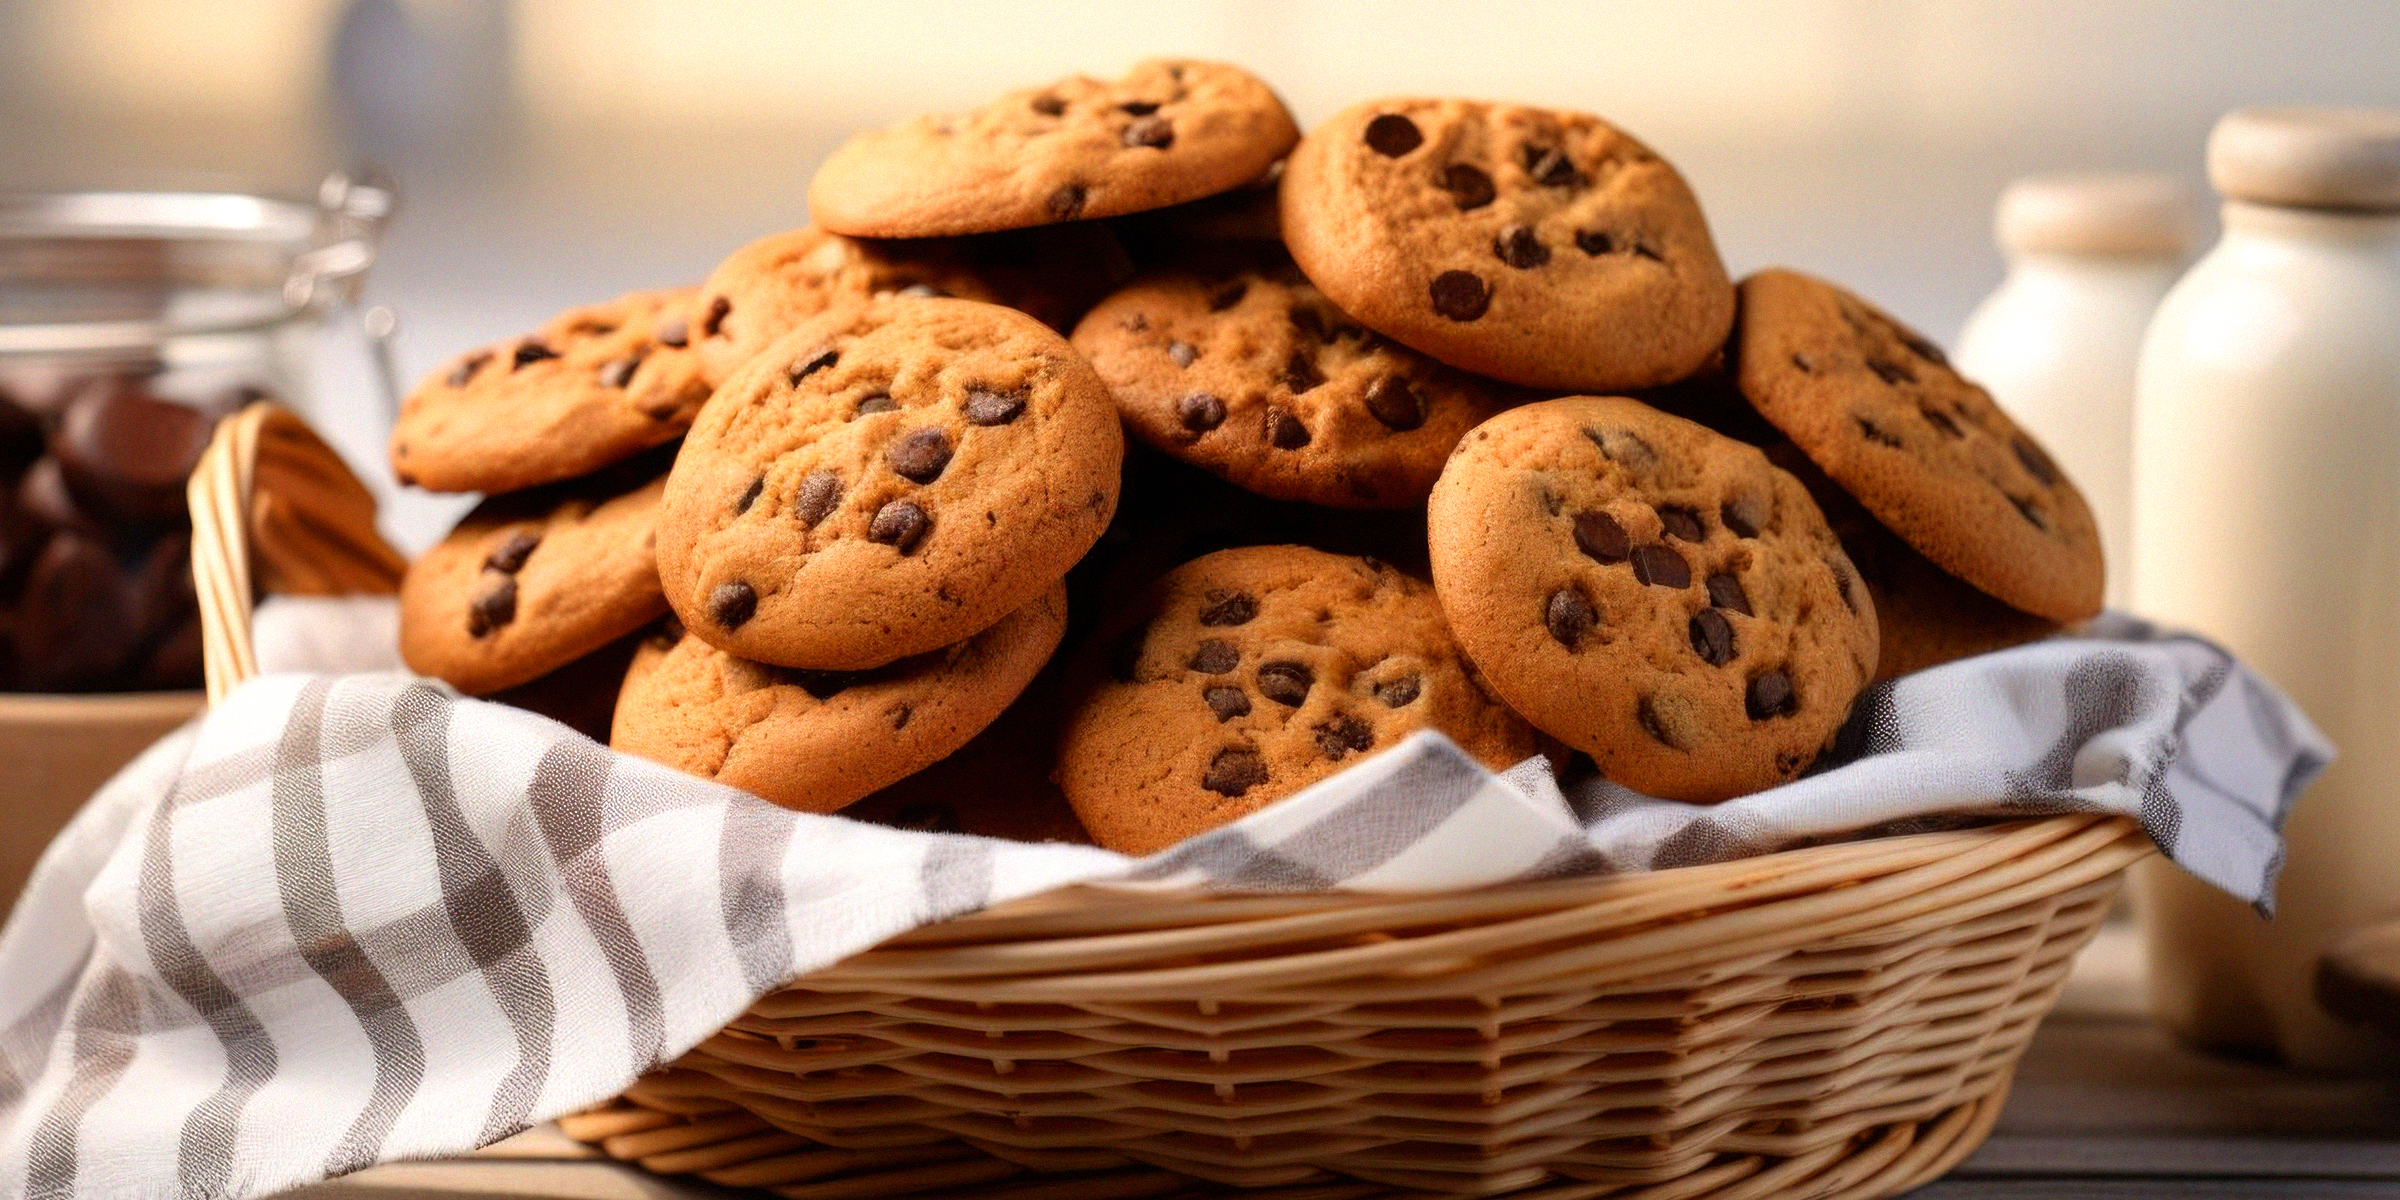 Close up photo of baked cookies | Source: Freepik